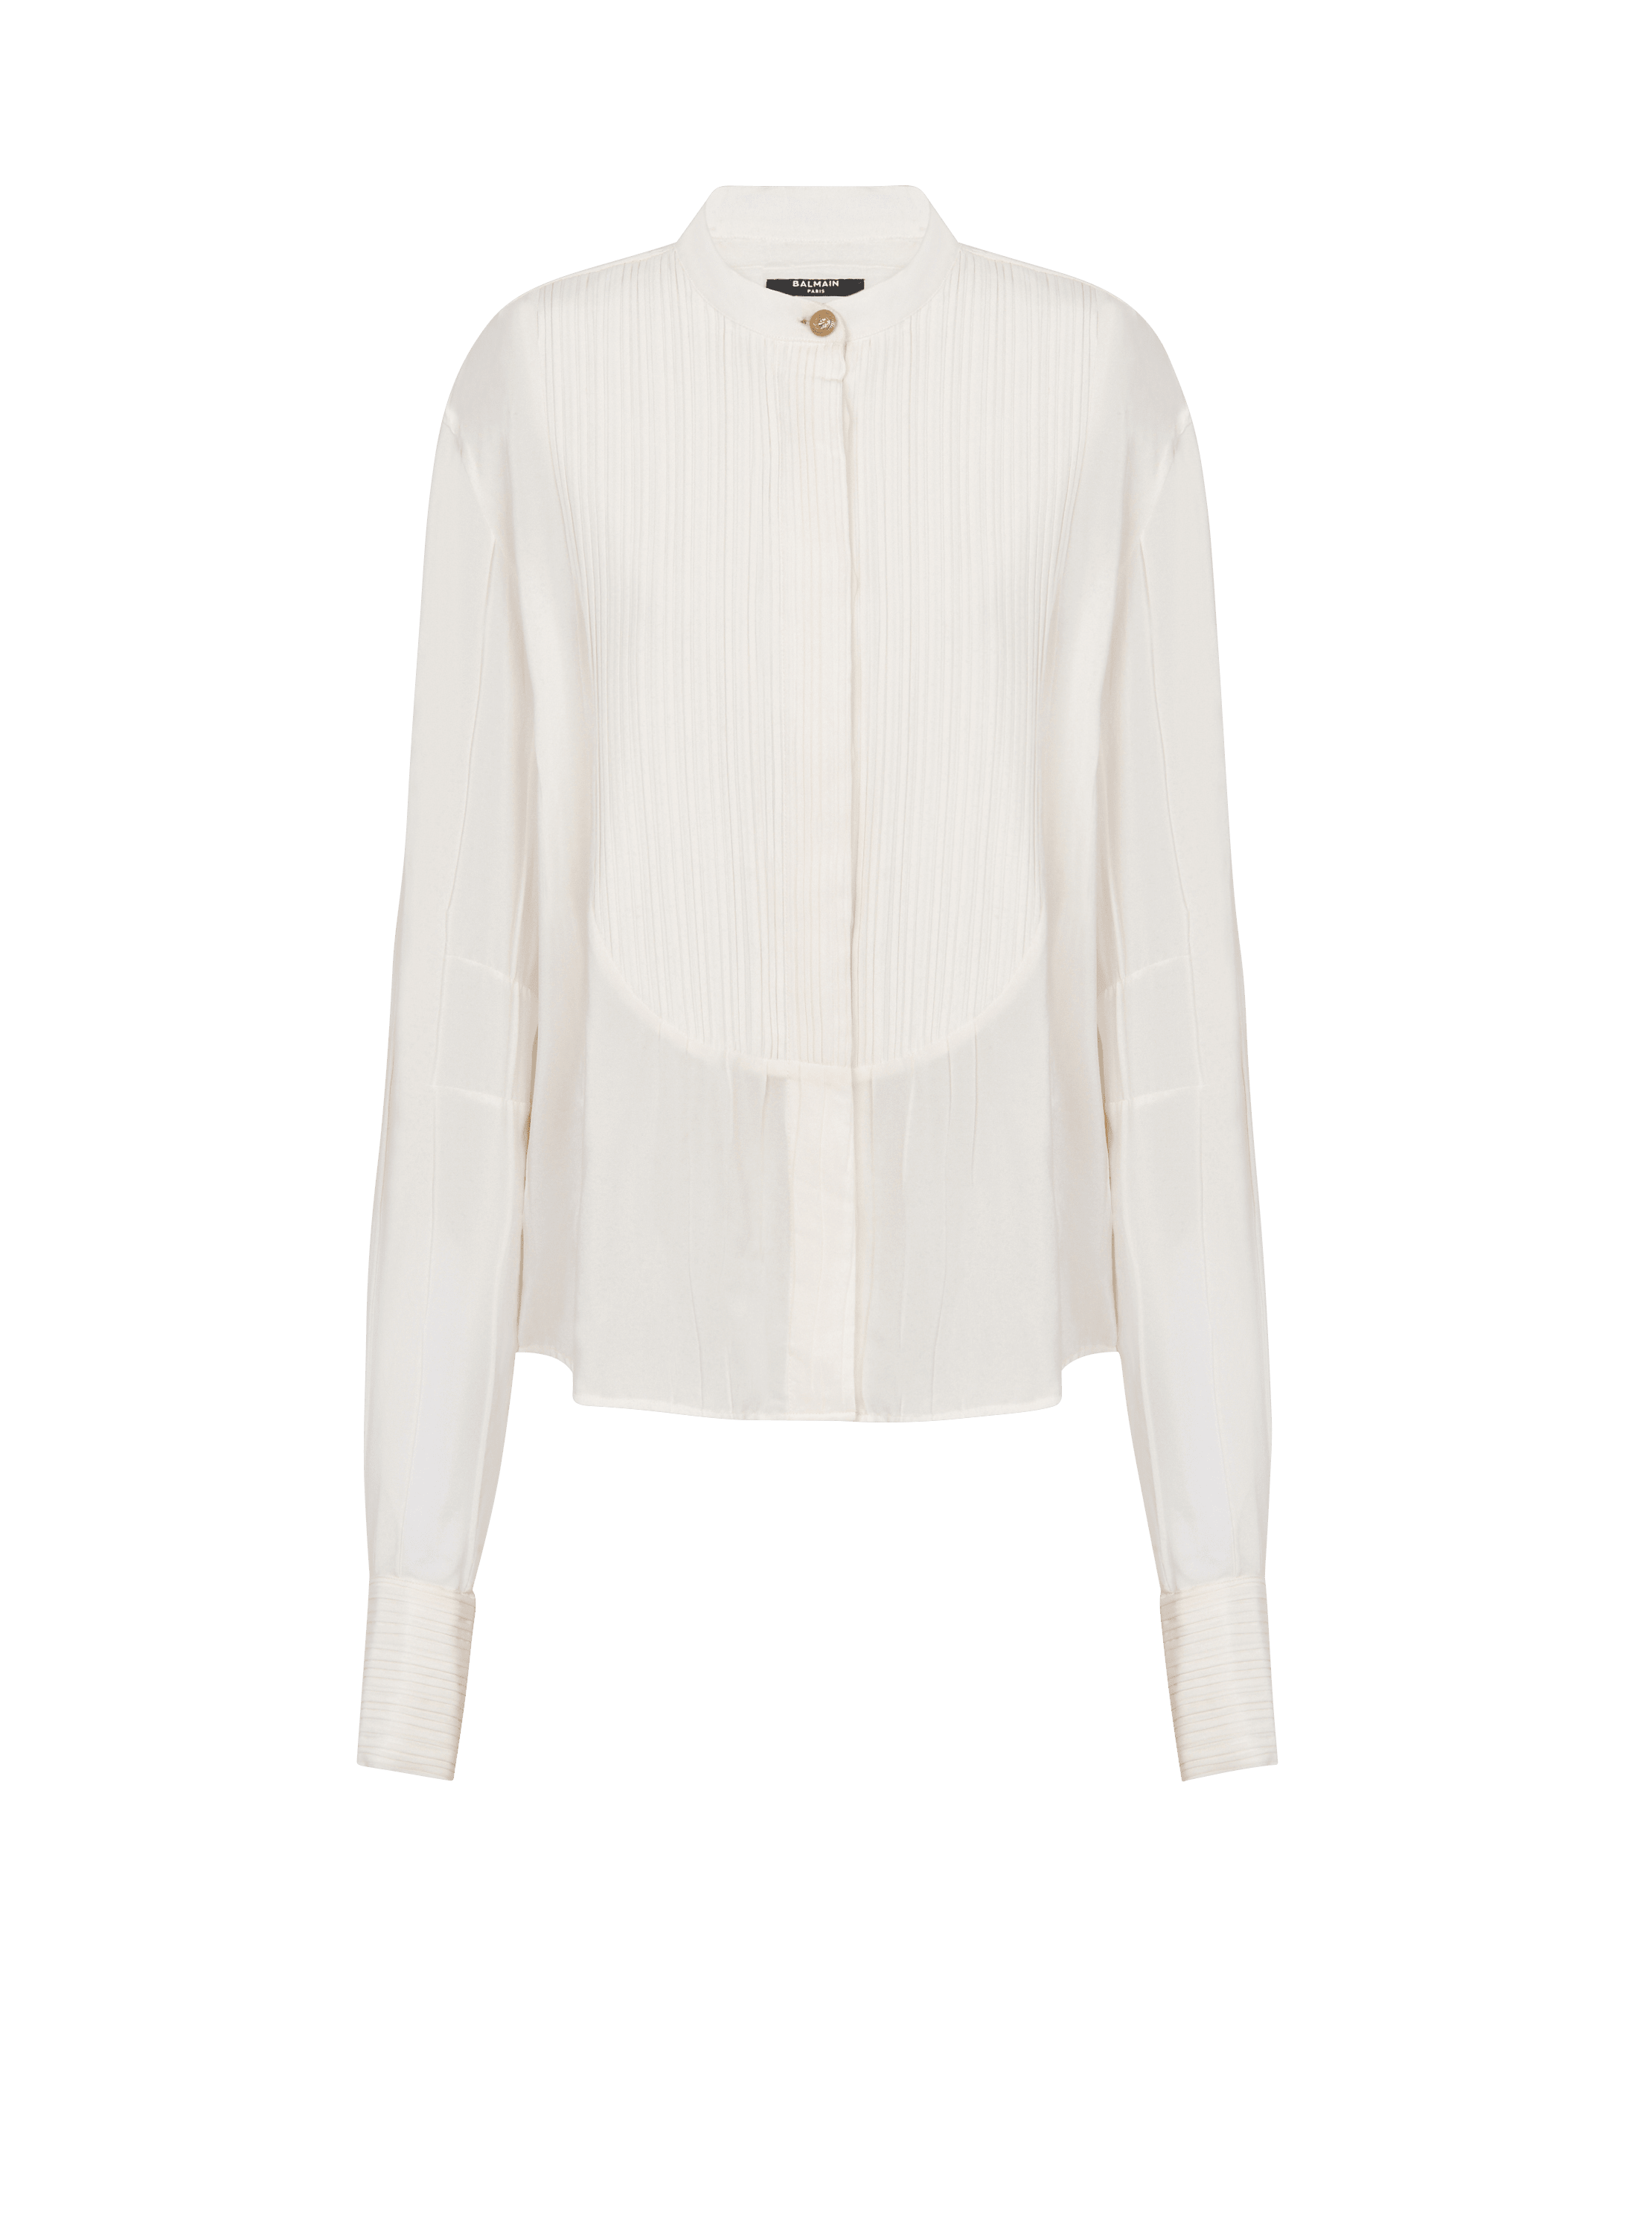 Pleated crepe Tuxedo shirt, white, hi-res